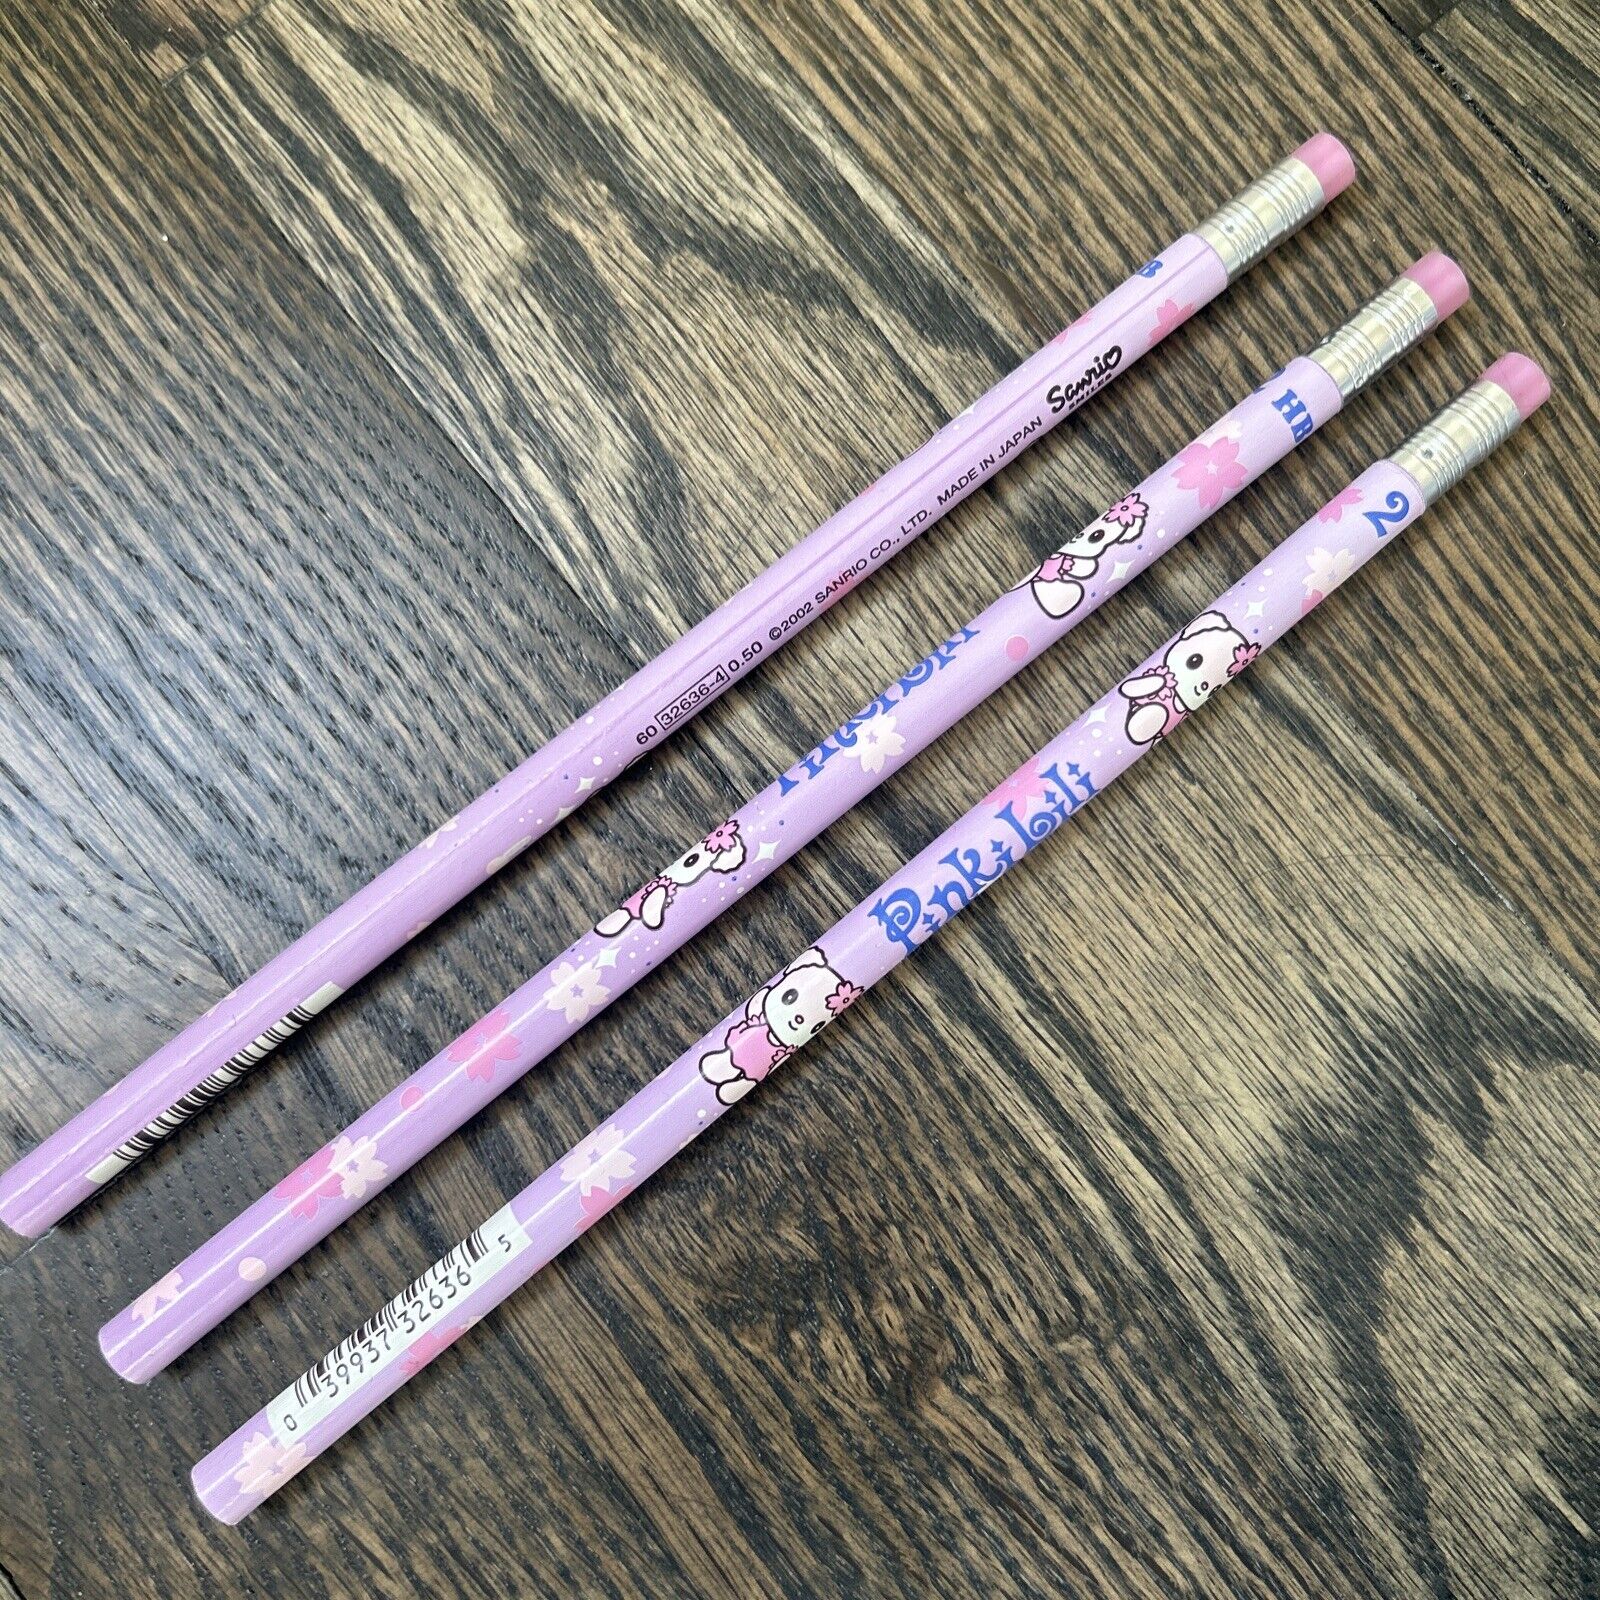 3 X Sanrio 2002 Pinki Lili Pink Teddy Bear Vintage Pencils 2HB